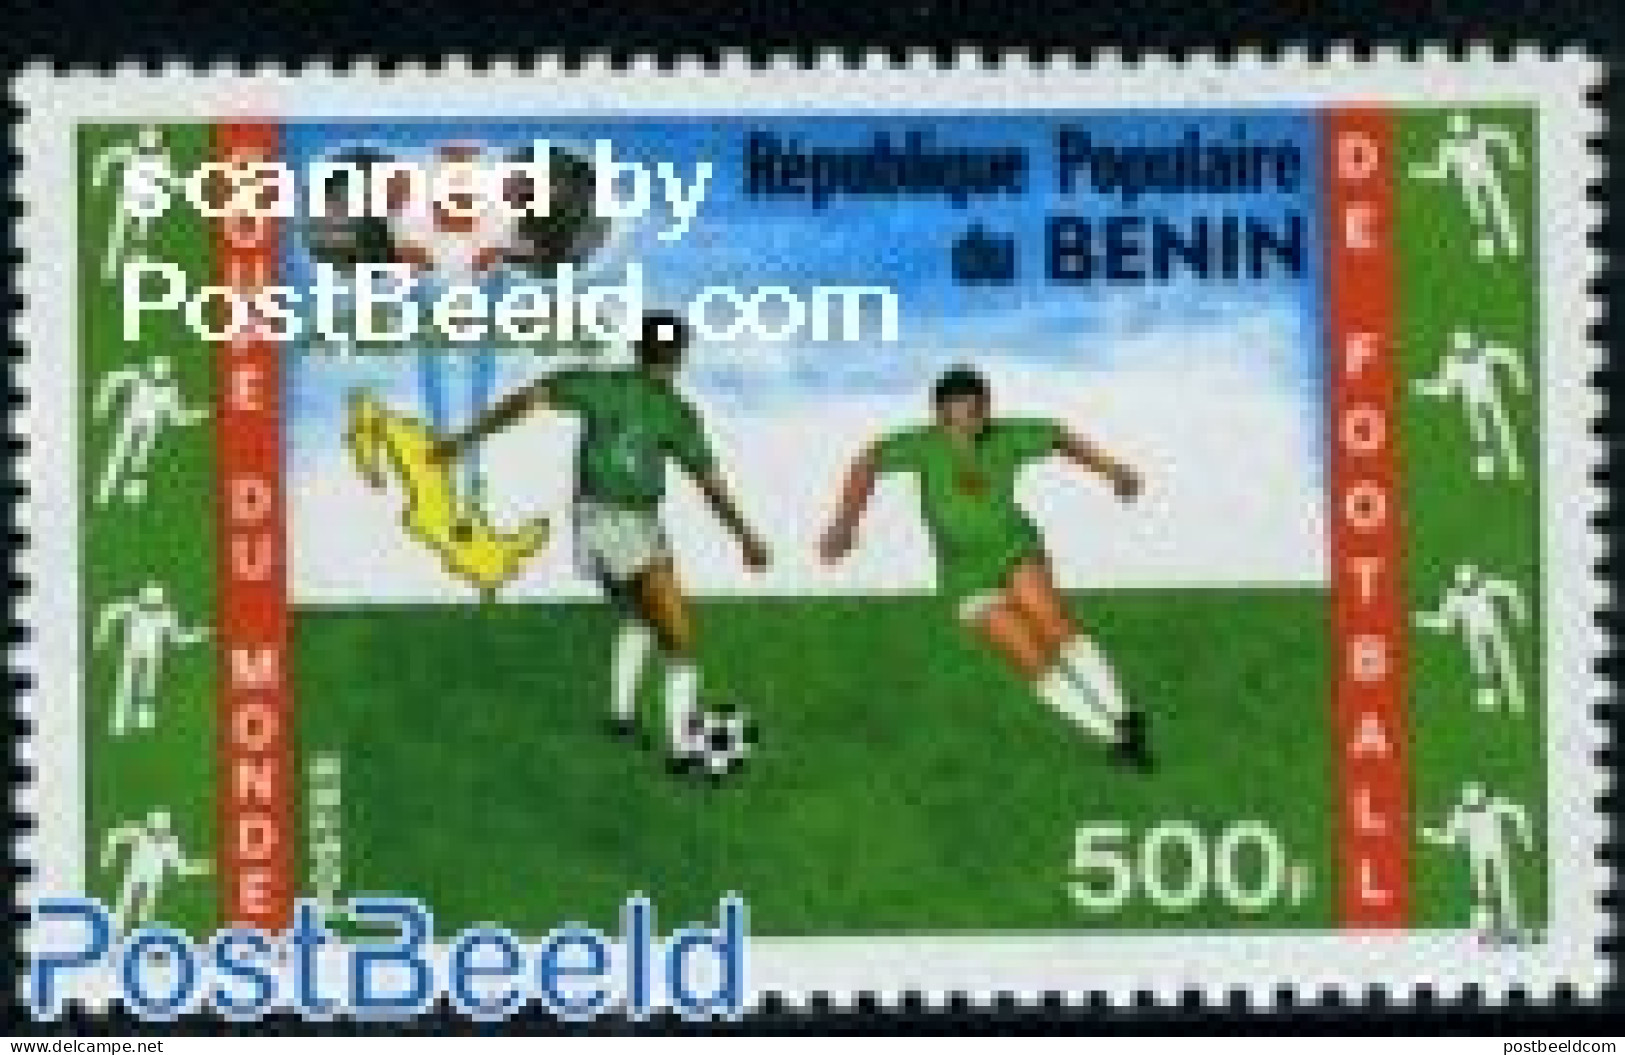 Benin 1986 Mexico 86 1v, Mint NH, Sport - Football - Nuevos